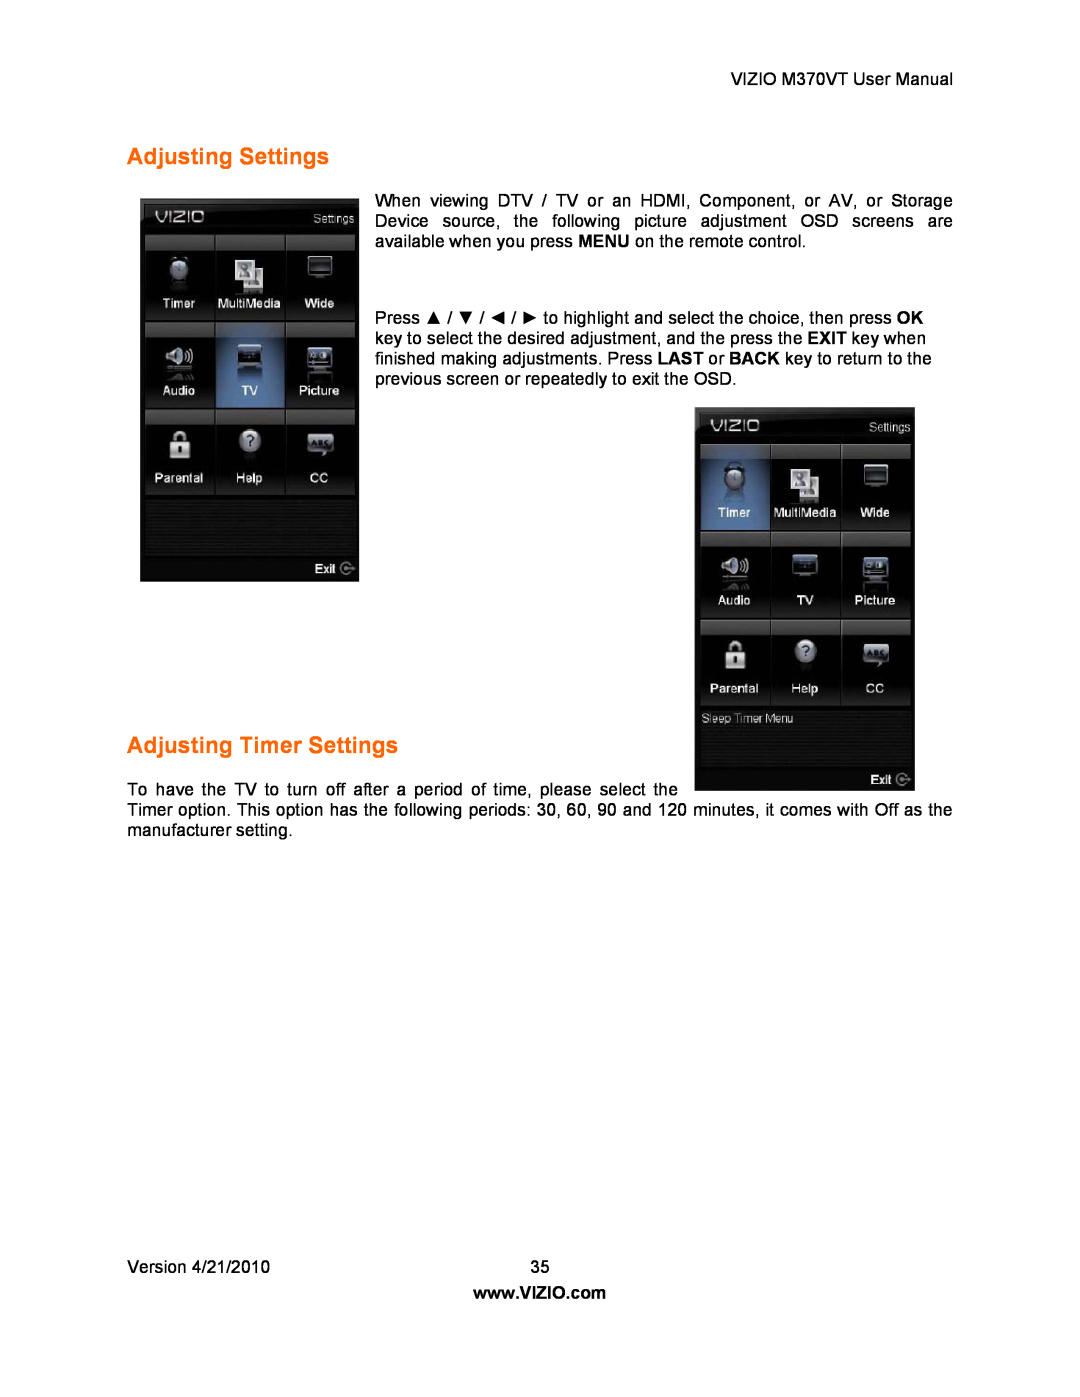 Vizio M370VT manual Adjusting Settings, Adjusting Timer Settings 